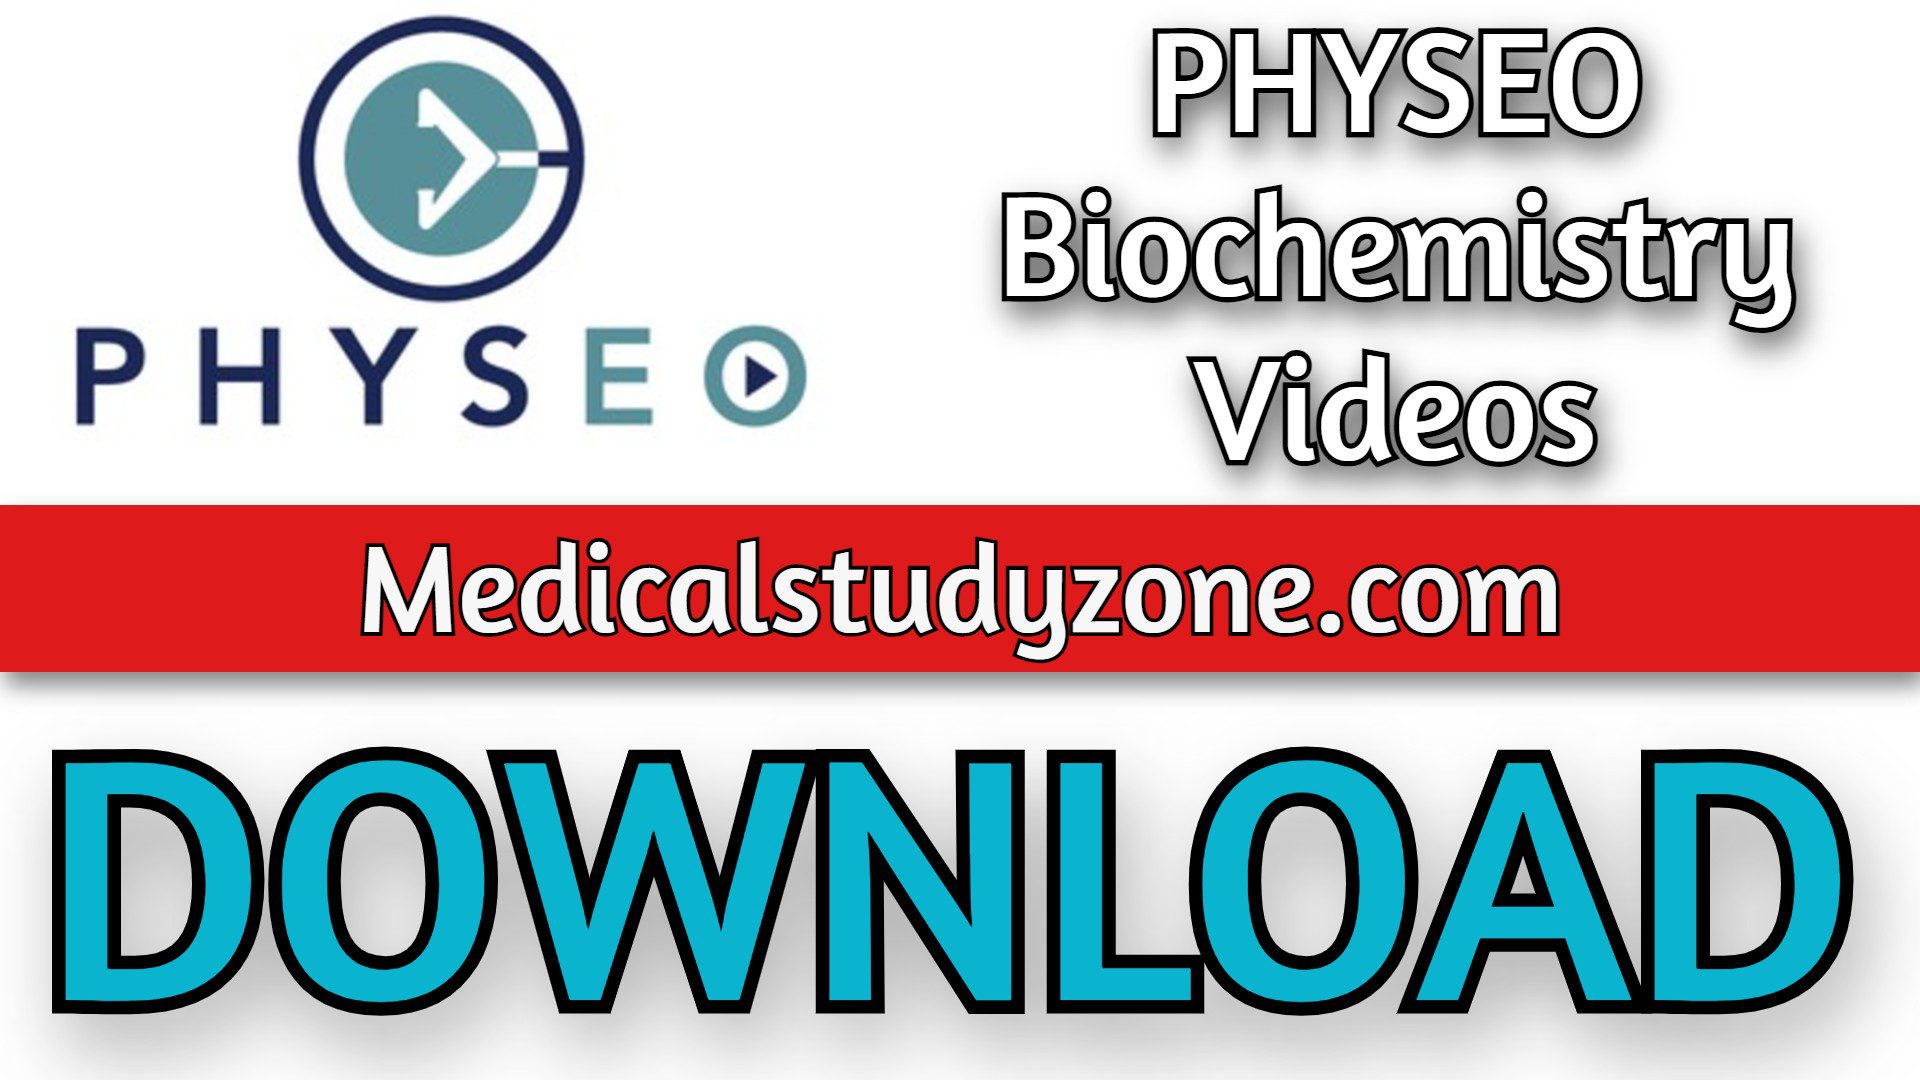 PHYSEO Biochemistry Videos 2022 Free Download